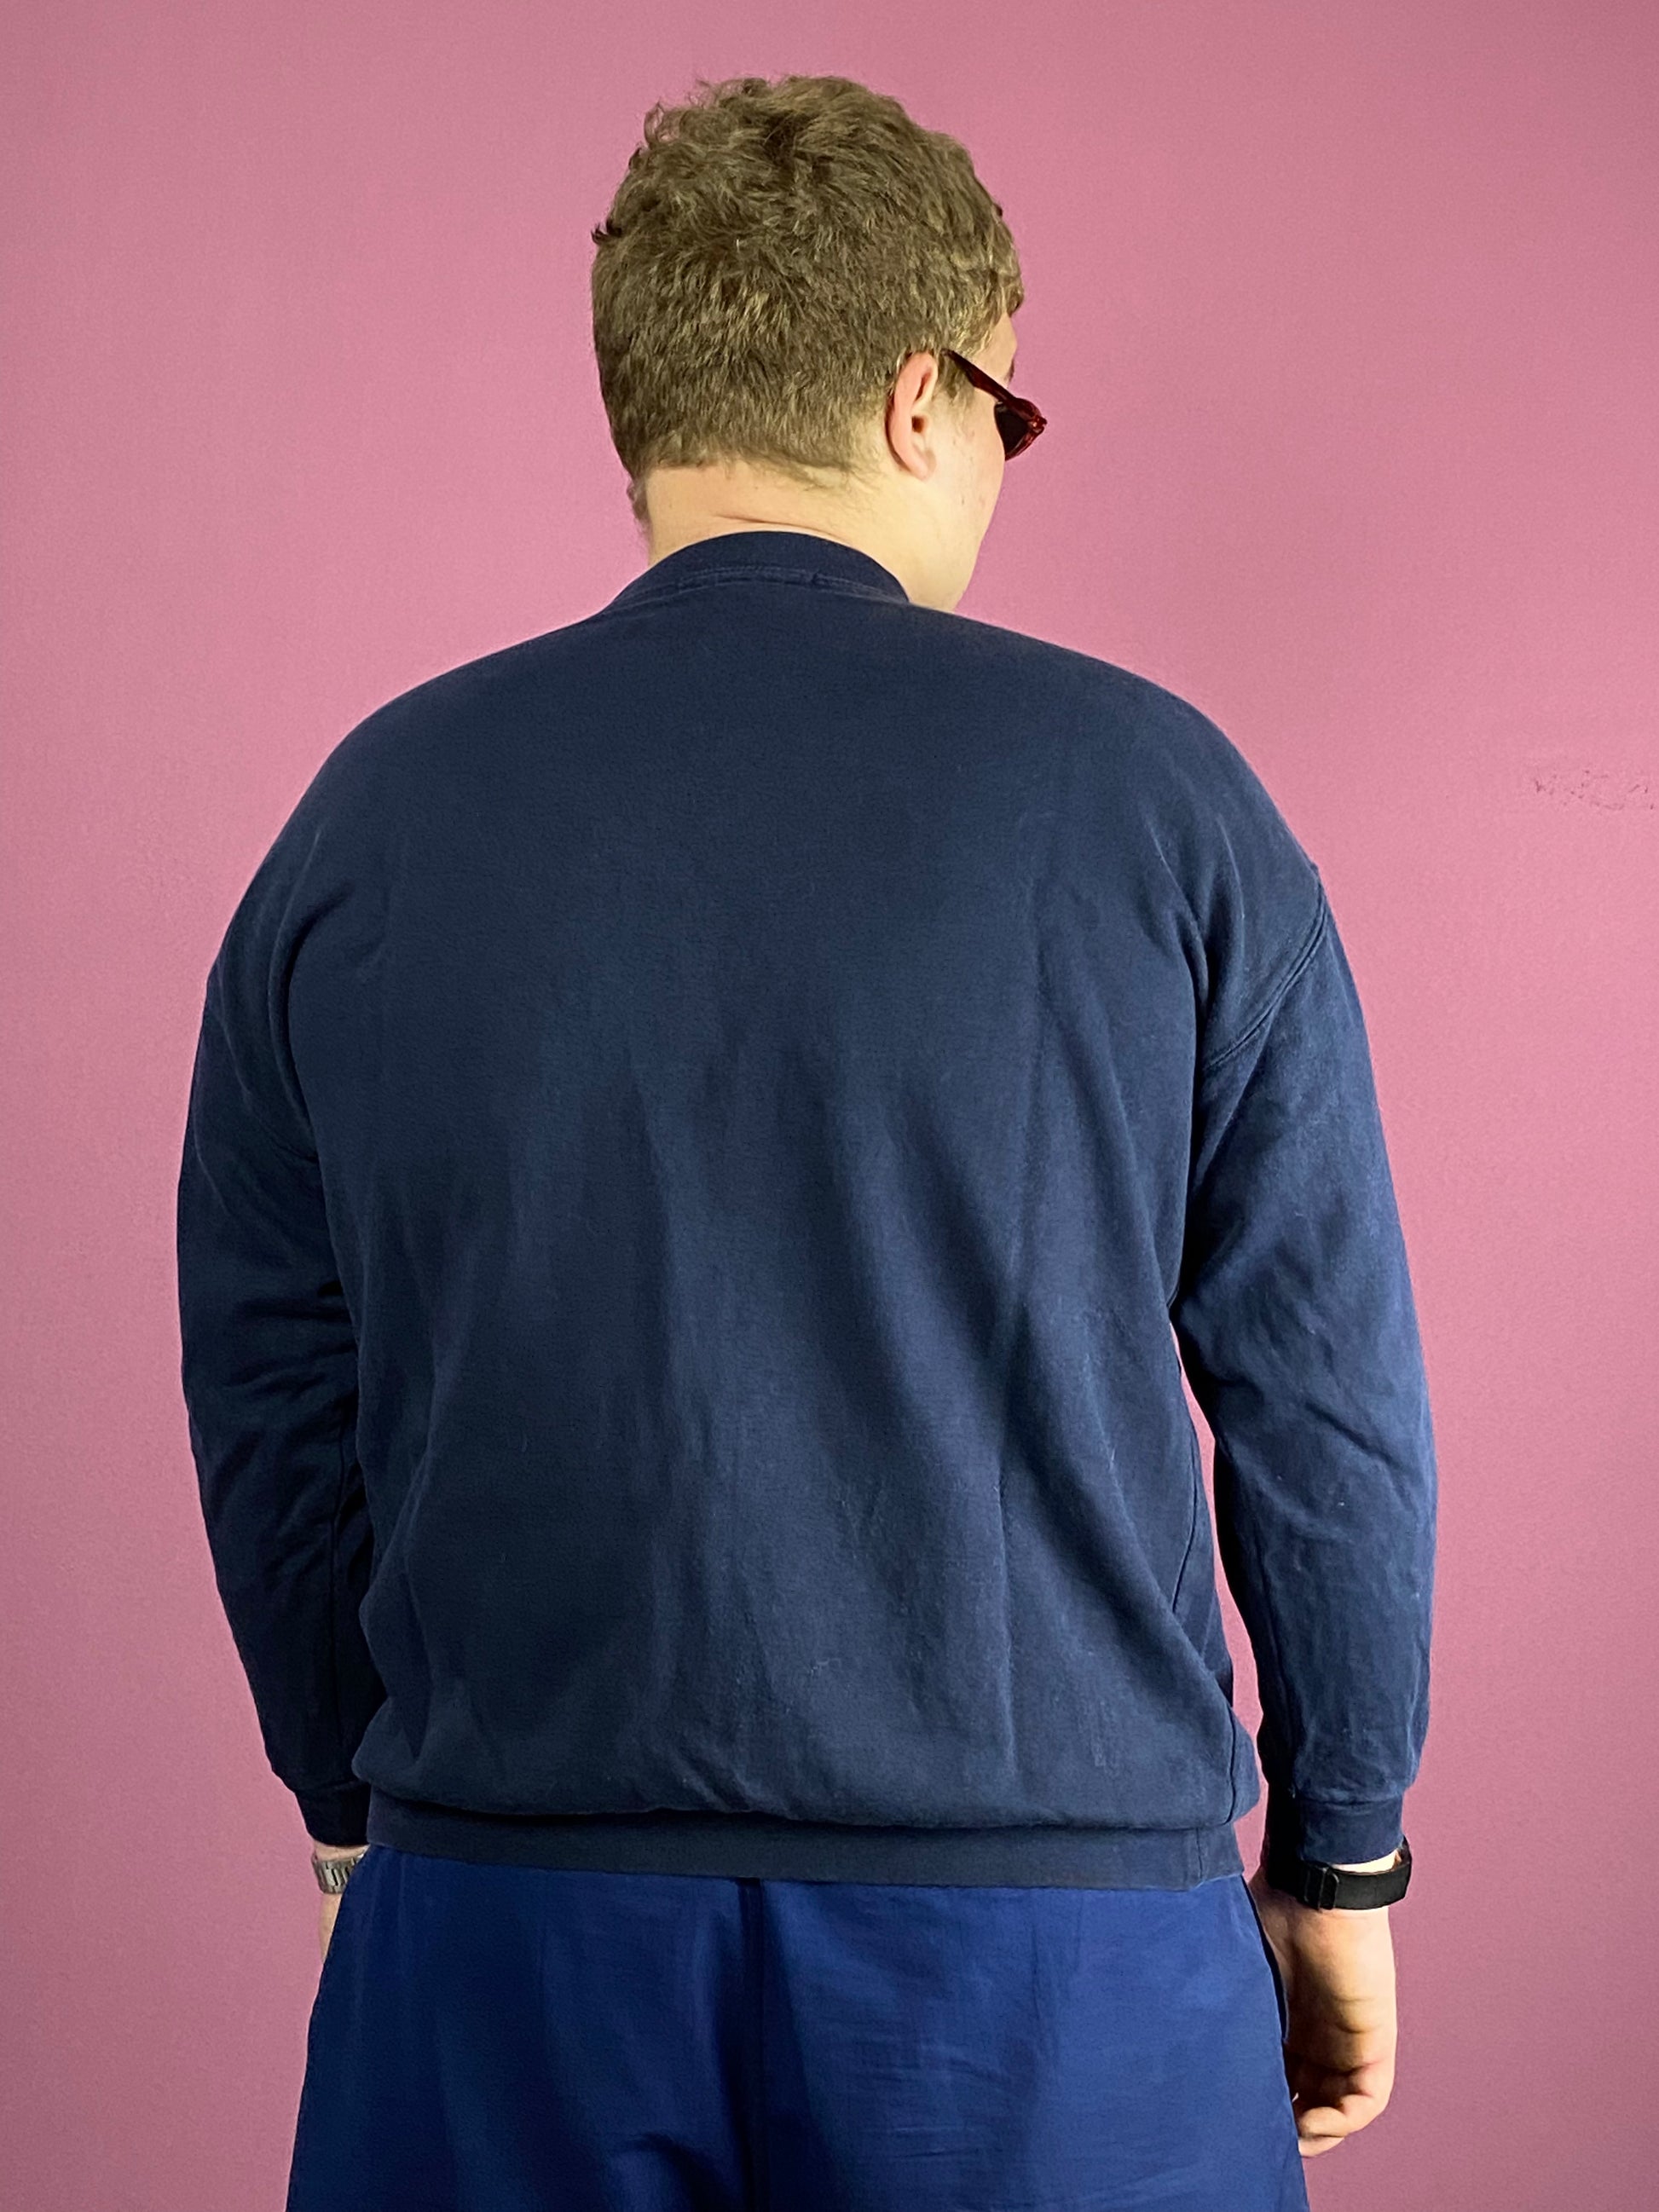 Polo Sport Vintage Men's Sweatshirt - XXL Navy Blue Cotton